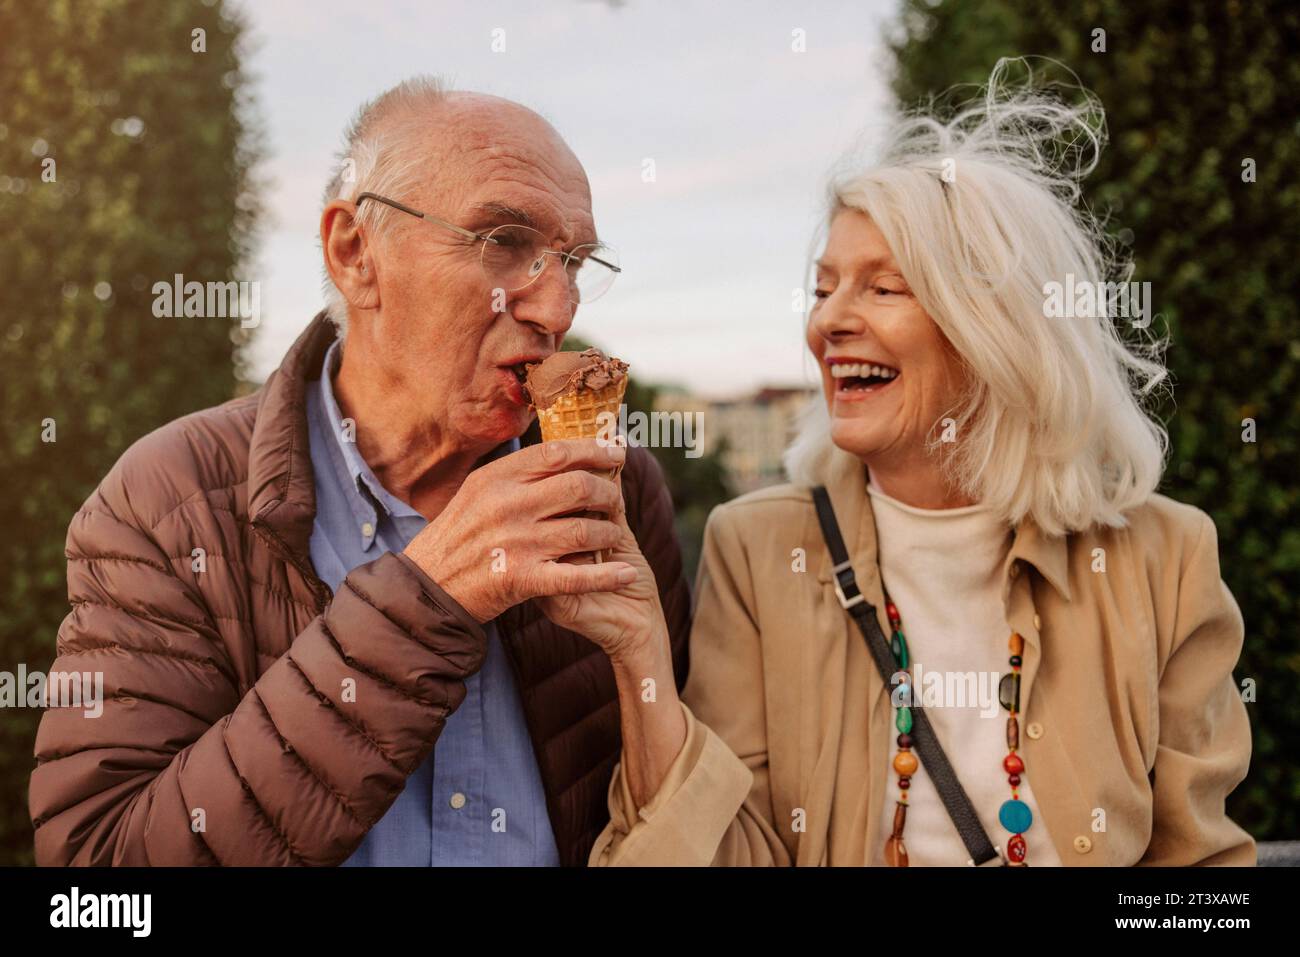 Happy senior couple sharing ice cream Stock Photo